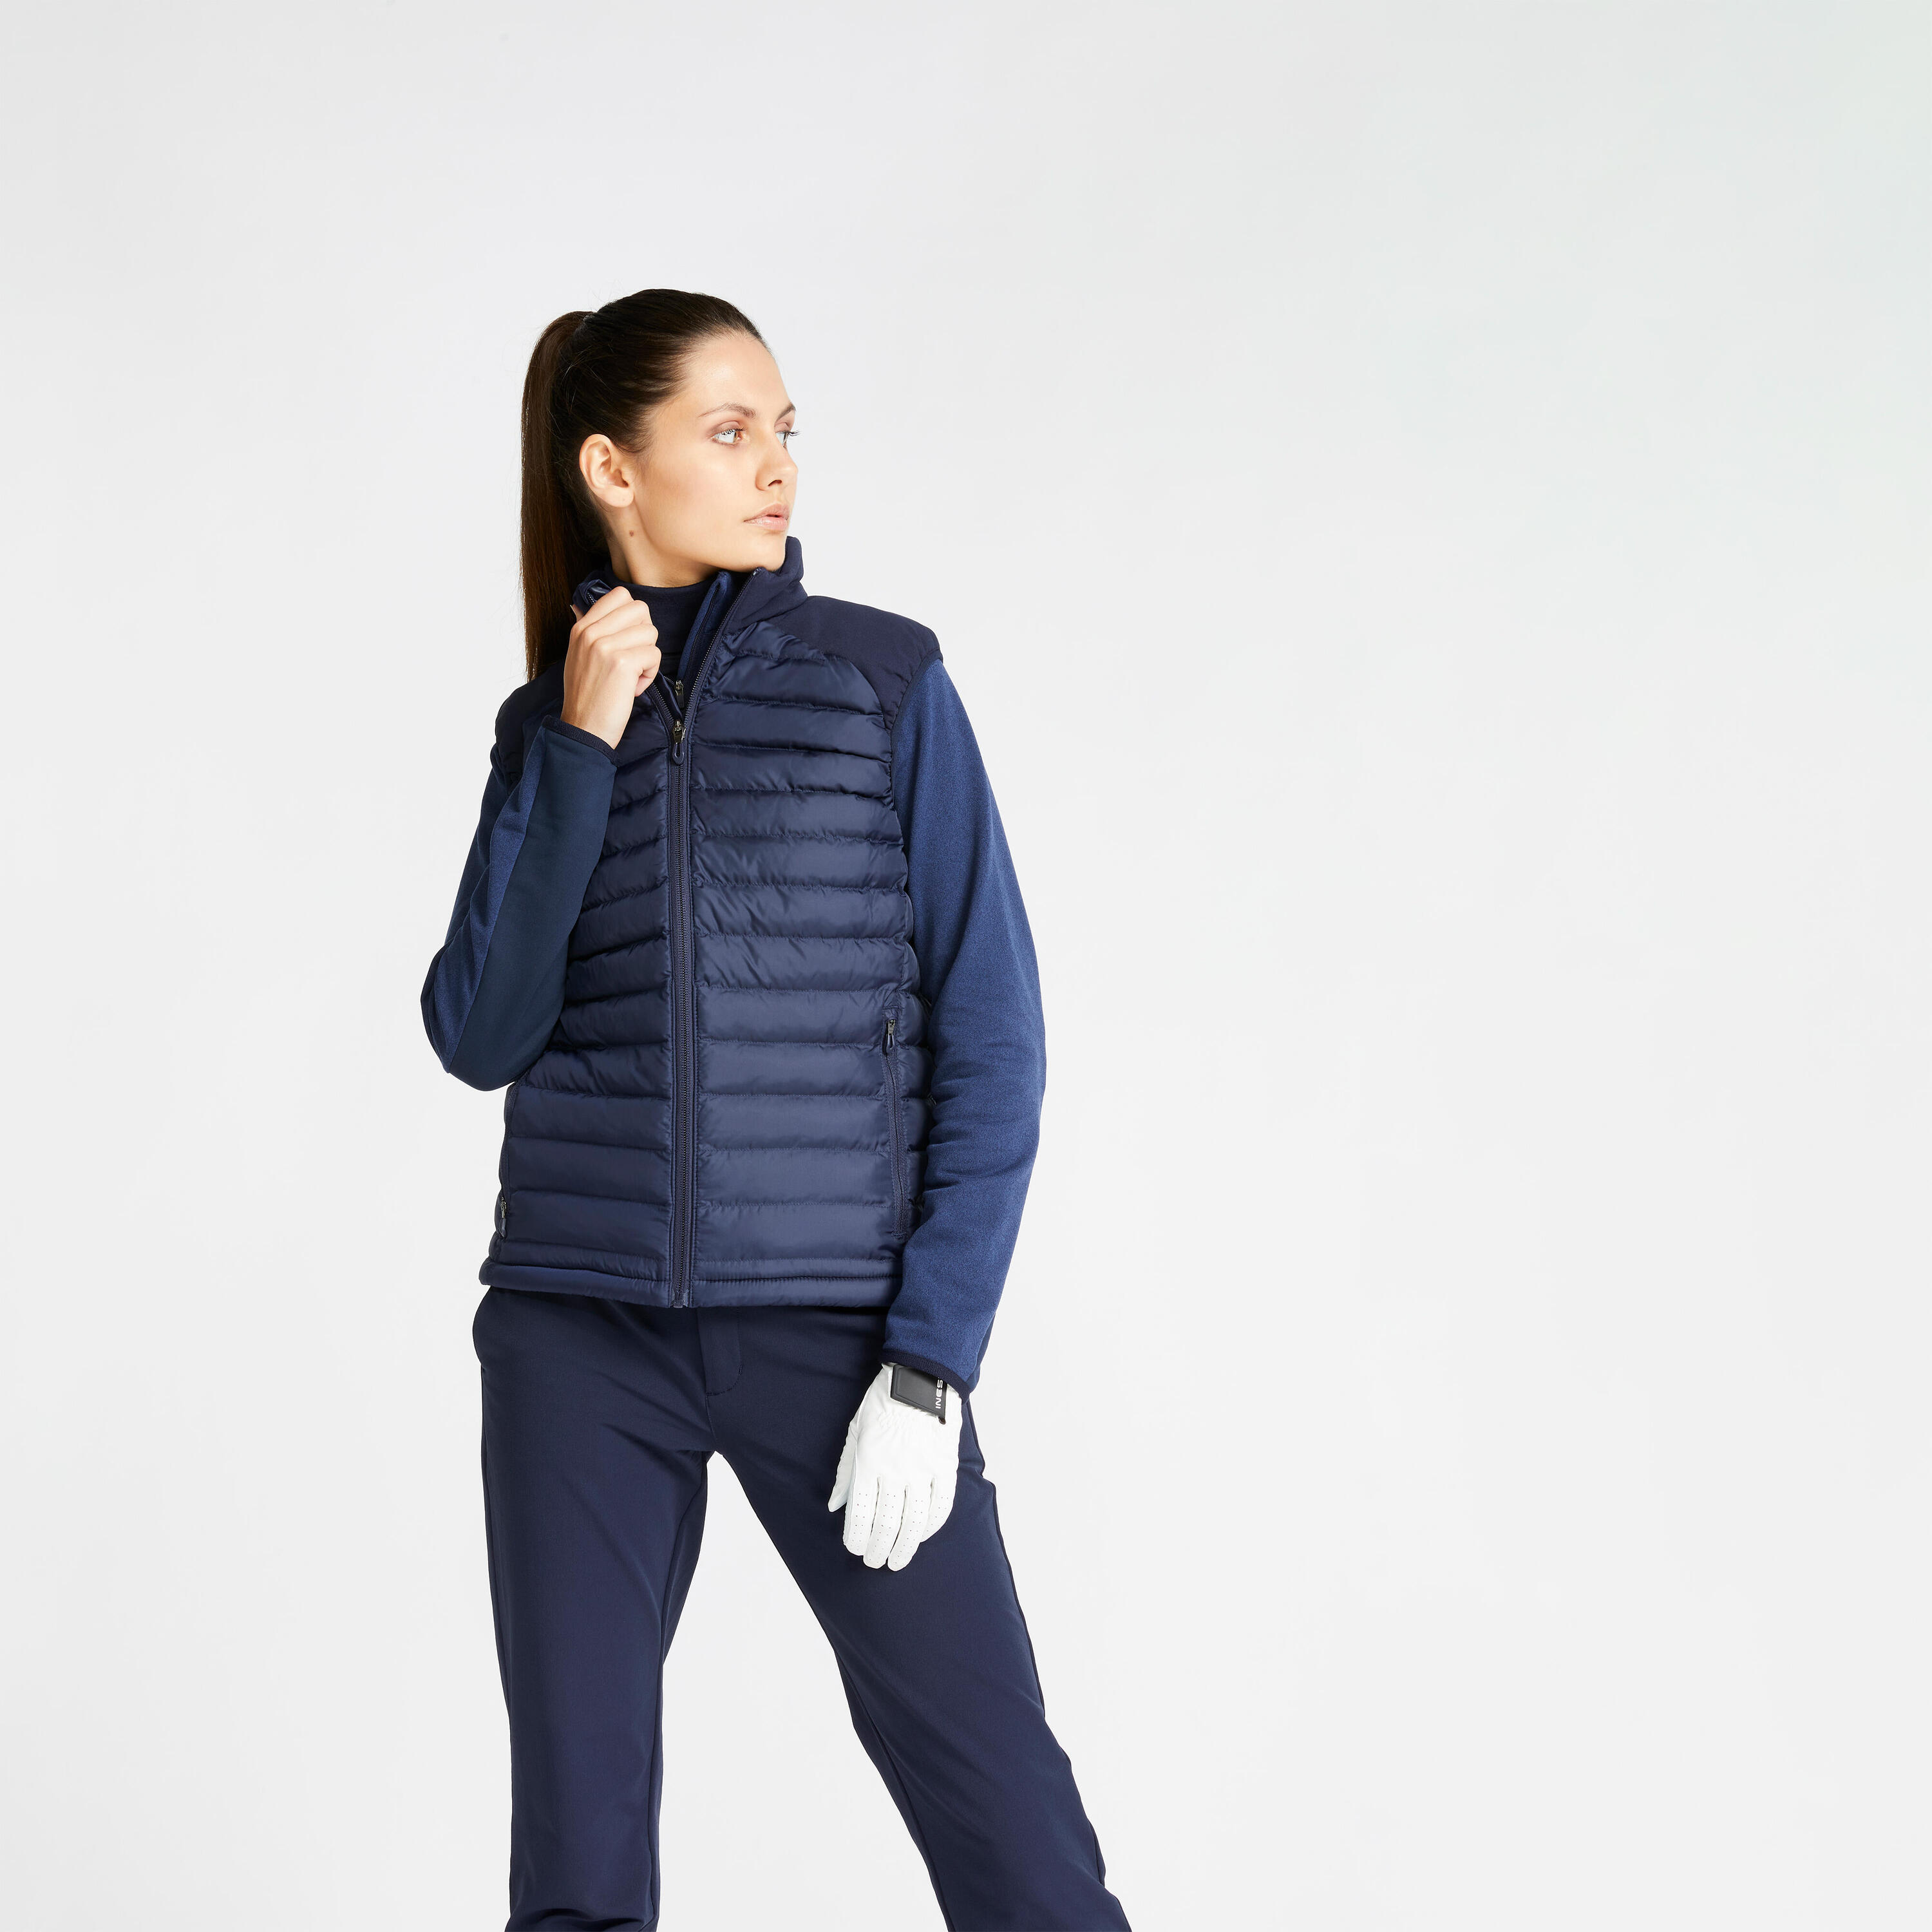 INESIS Women's golf winter sleeveless padded jacket CW500 navy blue